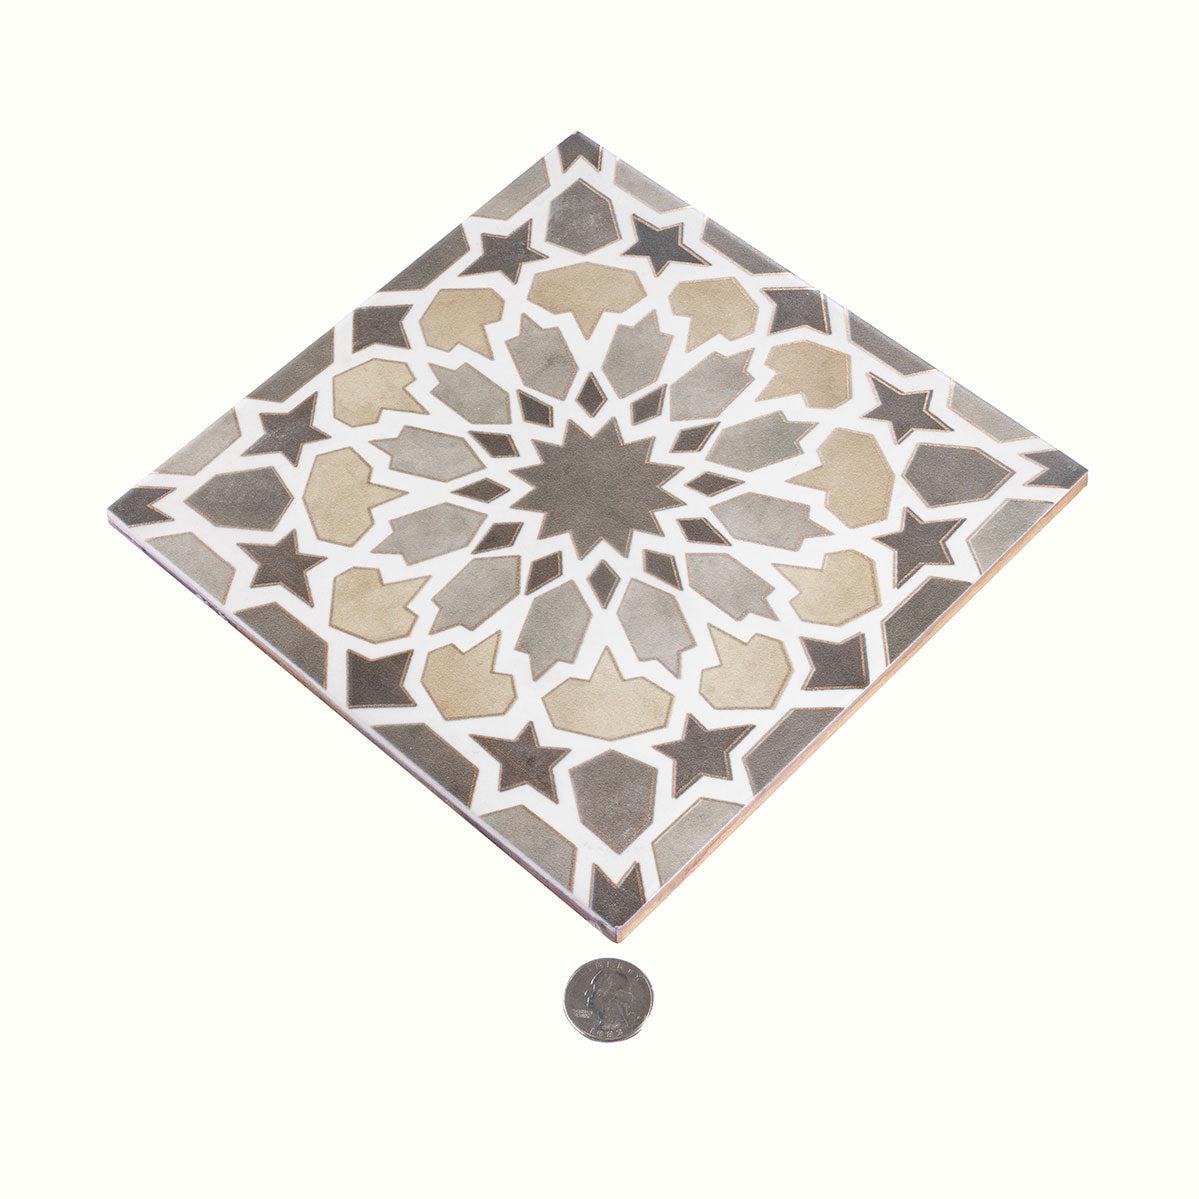 Amira Regal Taupe and Gold Patterned Porcelain Tile